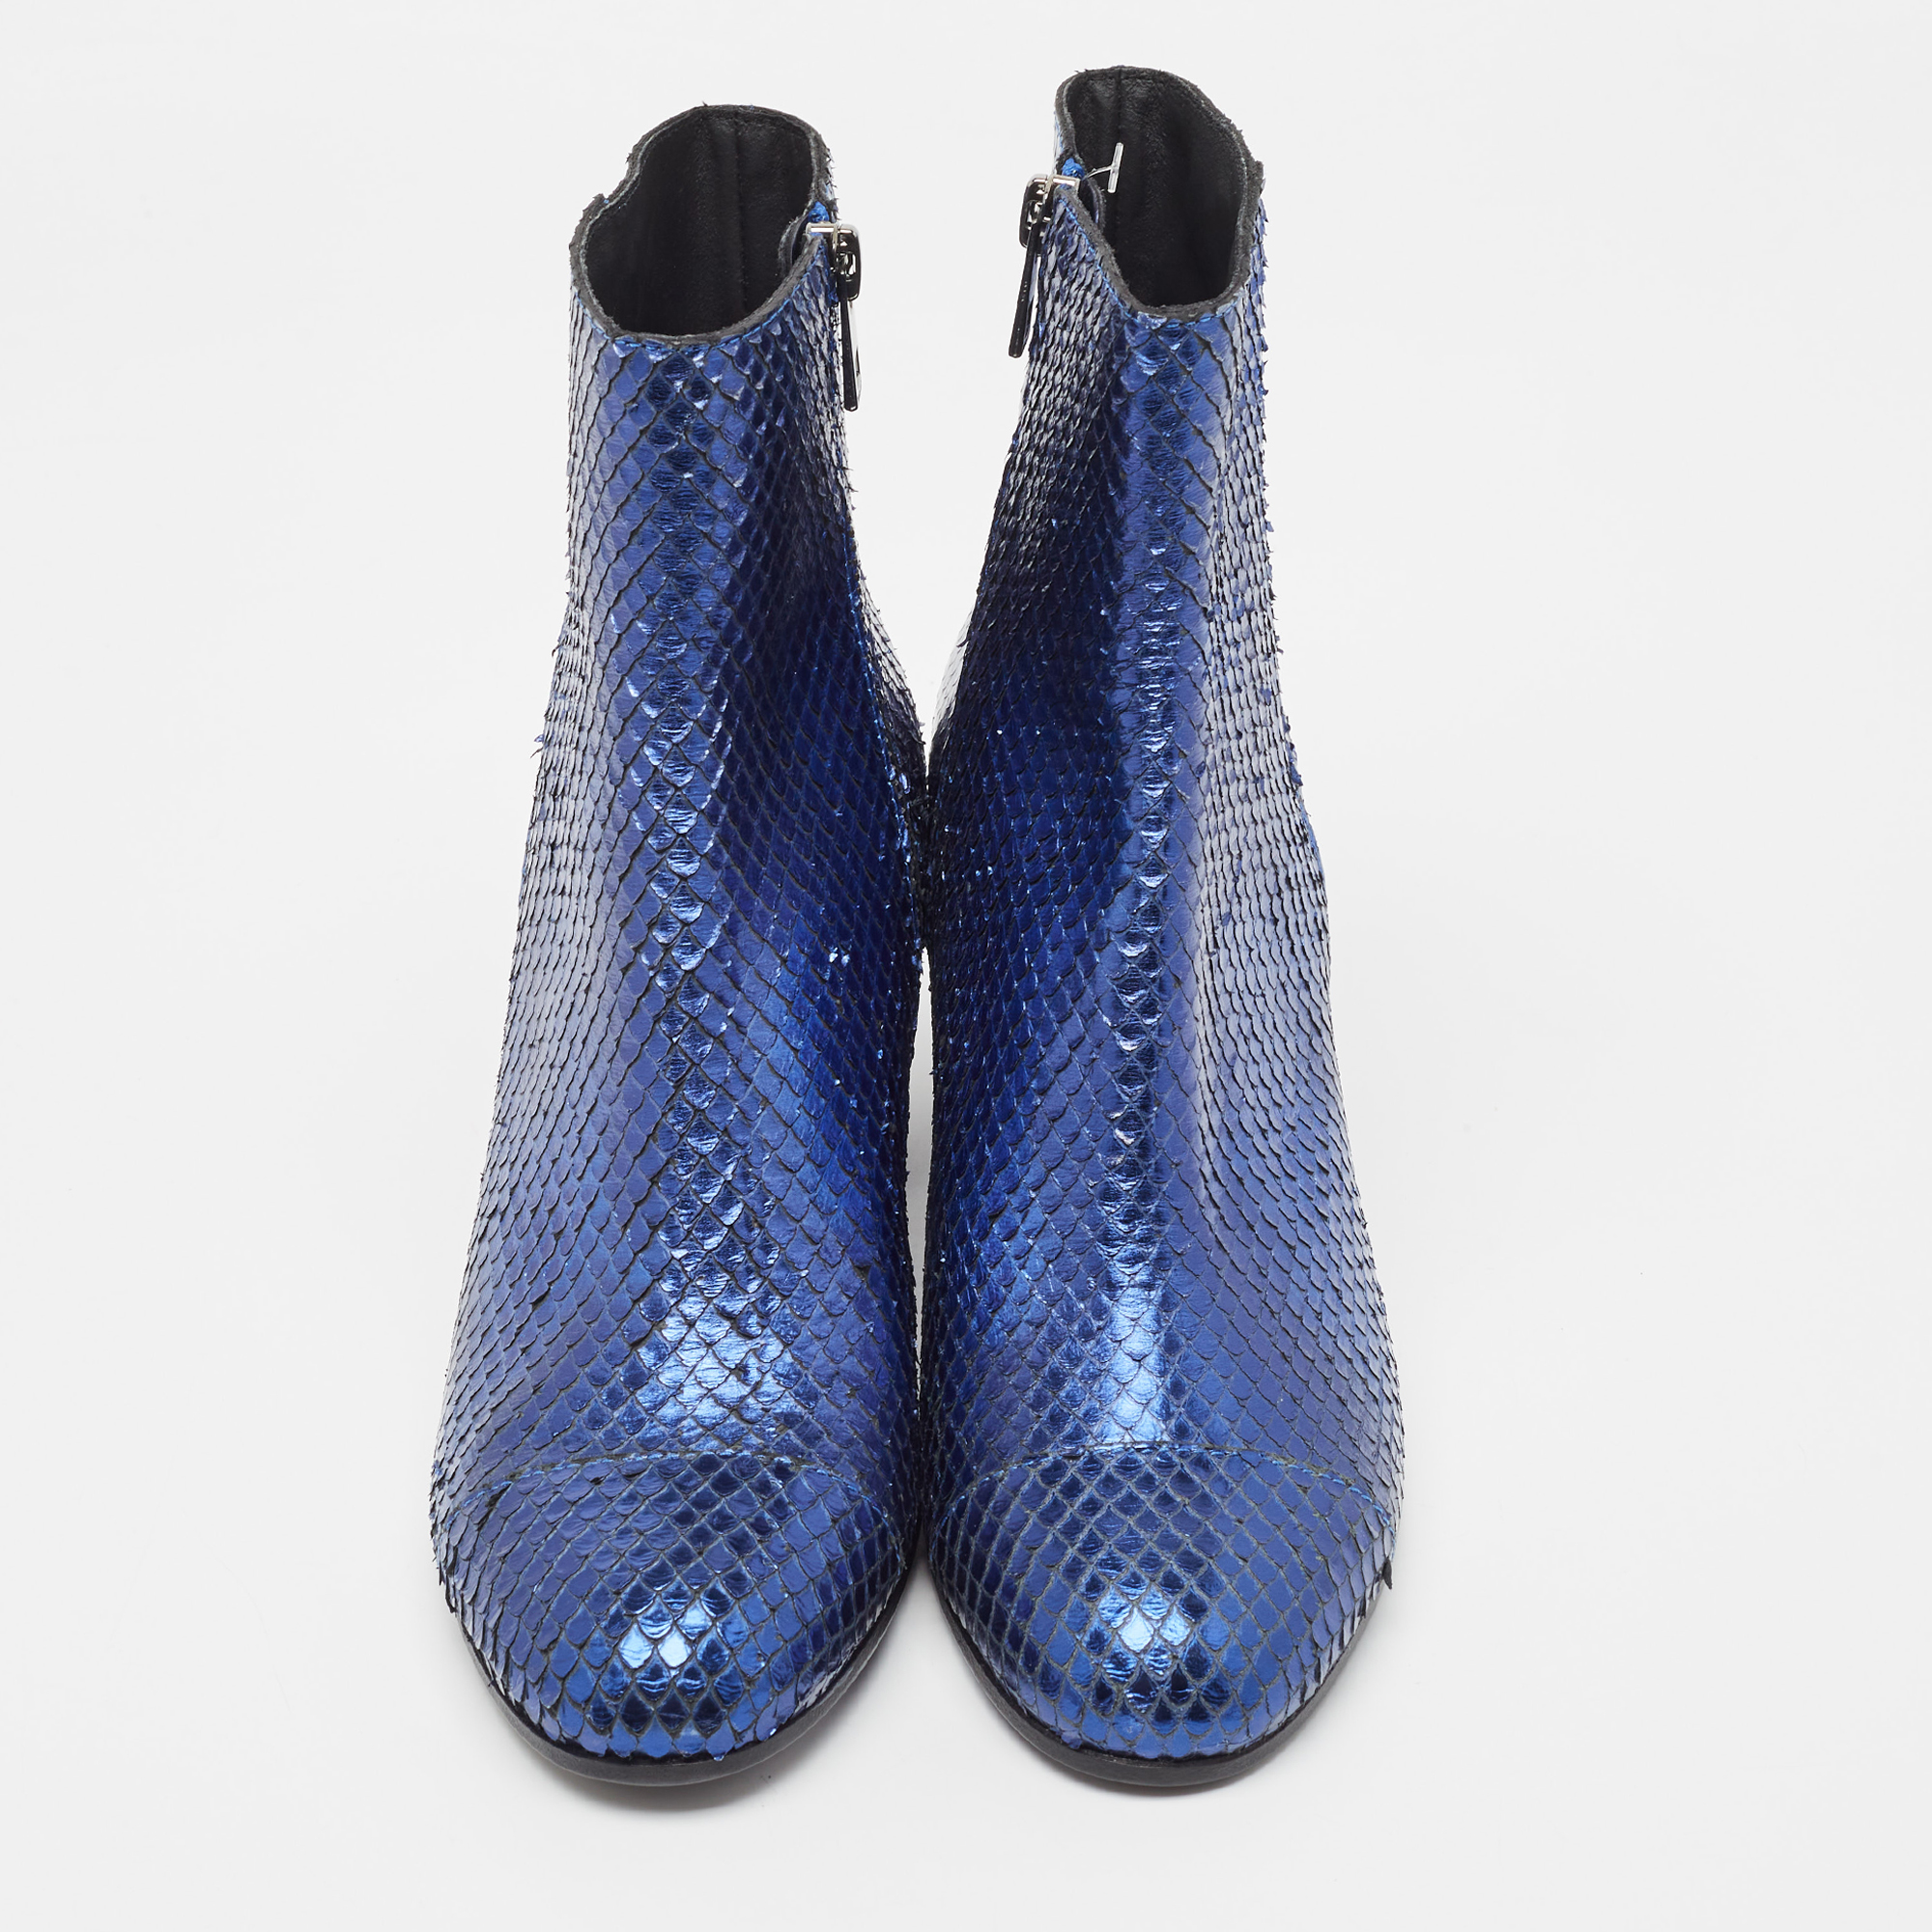 Zadiq & Voltaire Blue Python  Leather Block Heel Ankle Boots Size 37